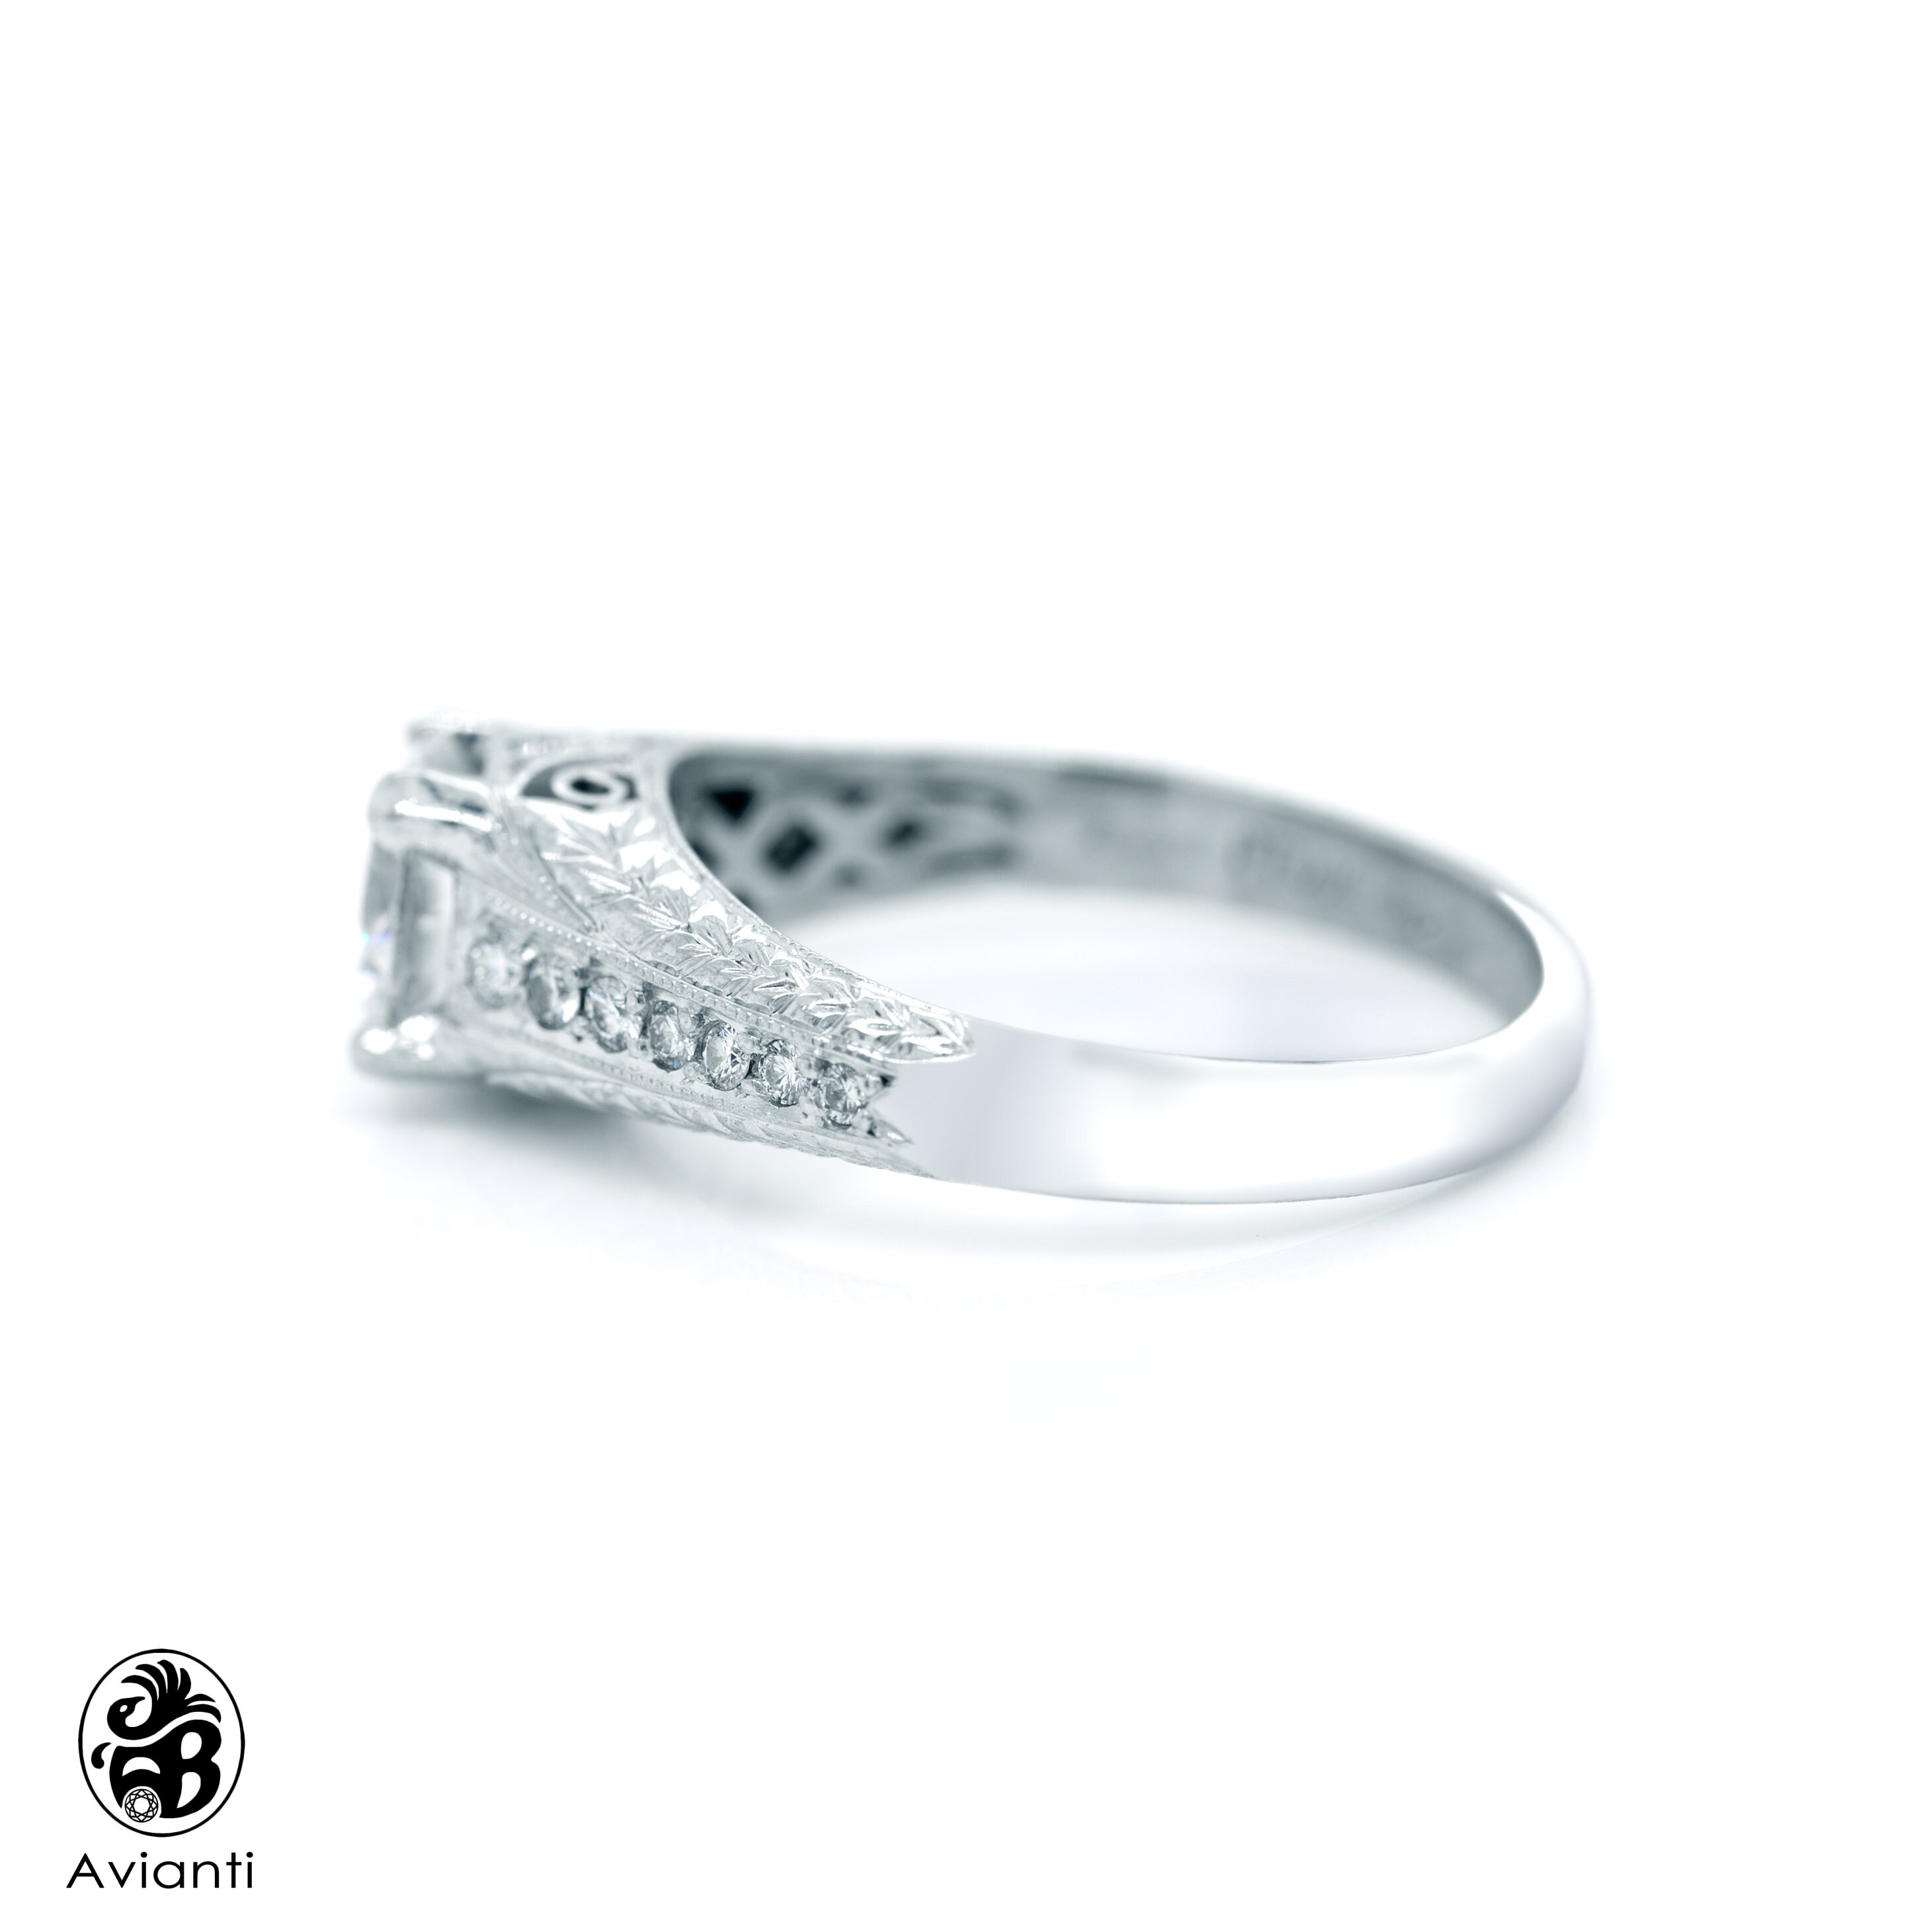 Pear Cut Lab Diamond Engagement Ring Rose Gold Vintage Halo Ring